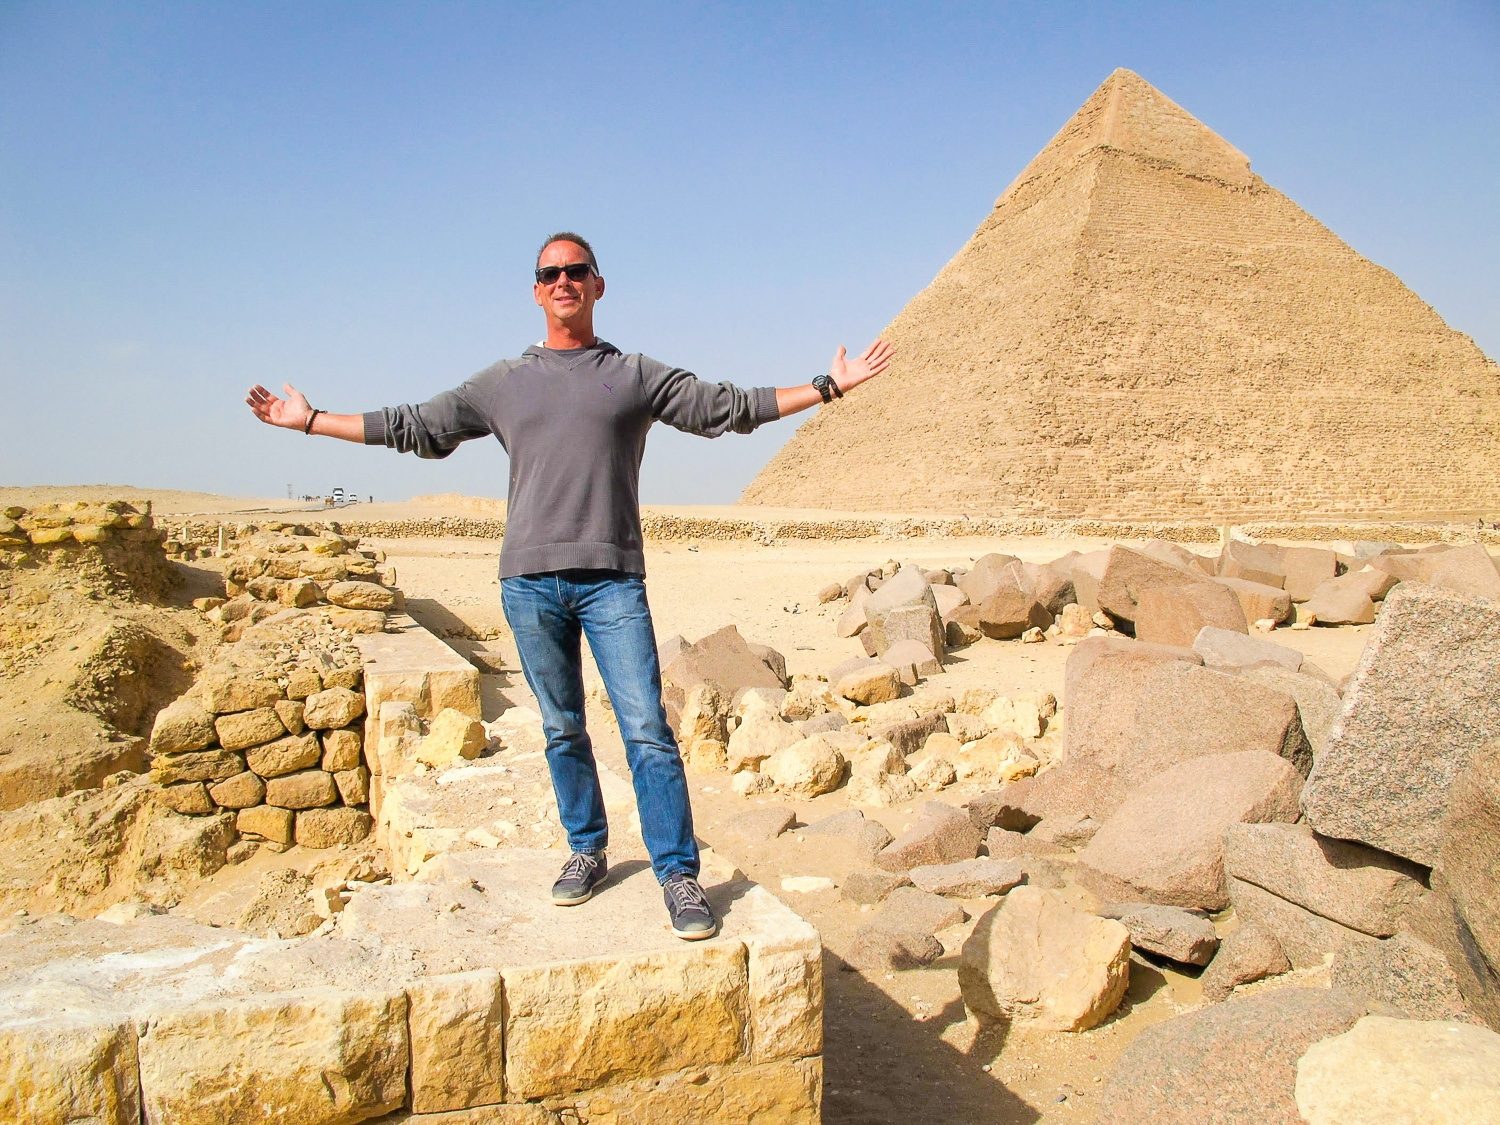 At the Giza, Egypt pyramids: one of Mark's lifelong dreams.